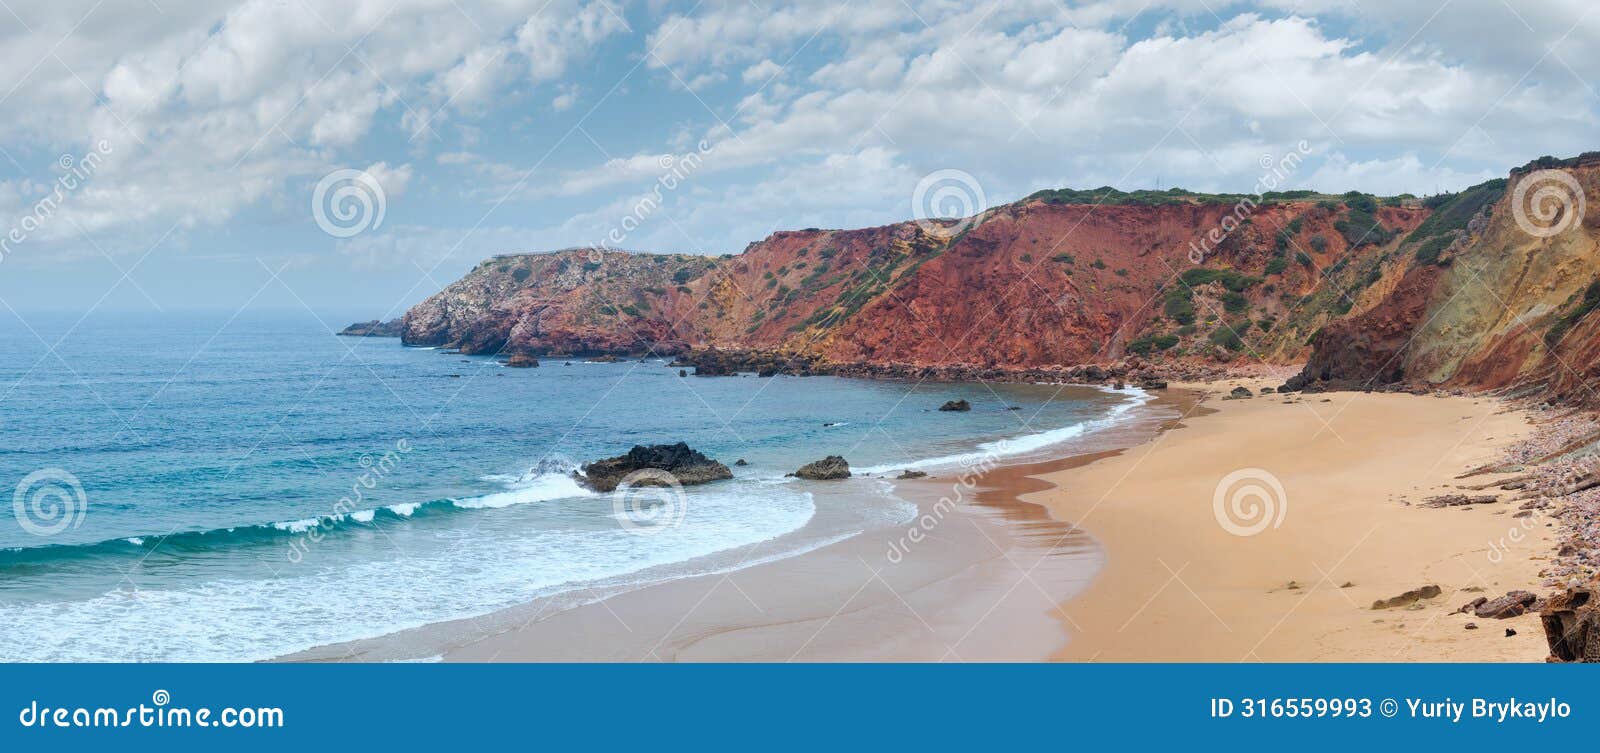 amado beach, algarve, portugal